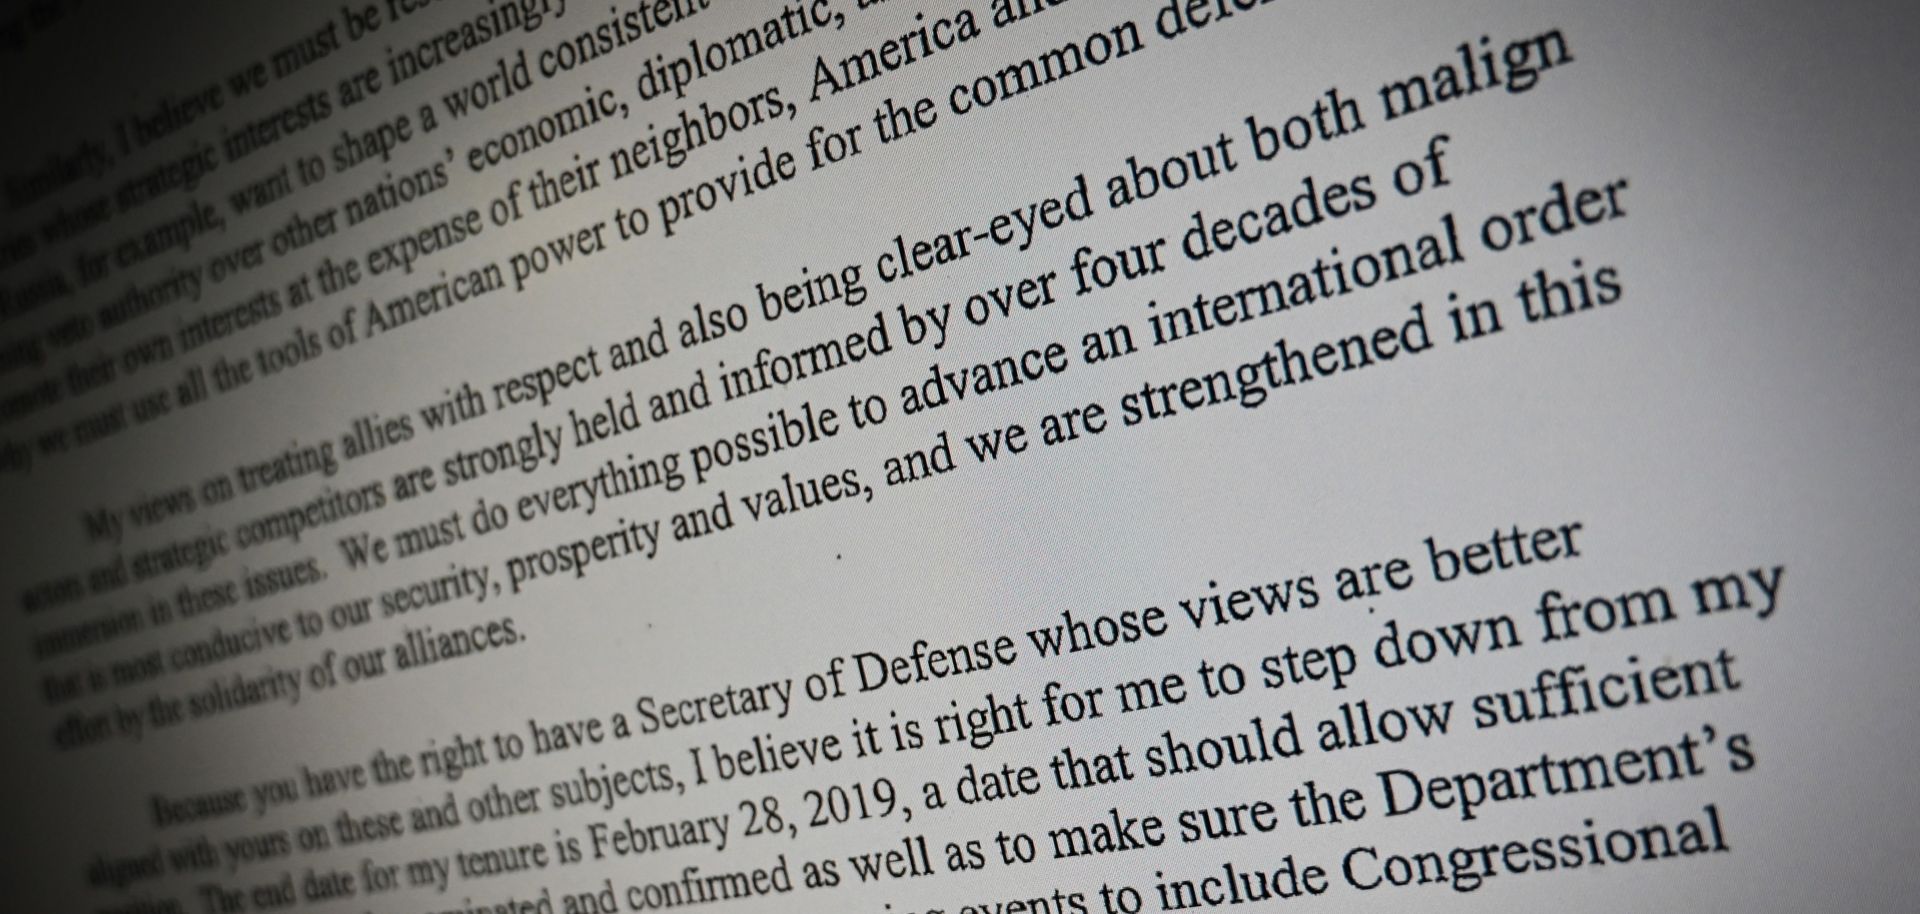 An image of the resignation letter U.S. Defense Secretary James Mattis sent to President Donald Trump on Dec. 20, 2018.